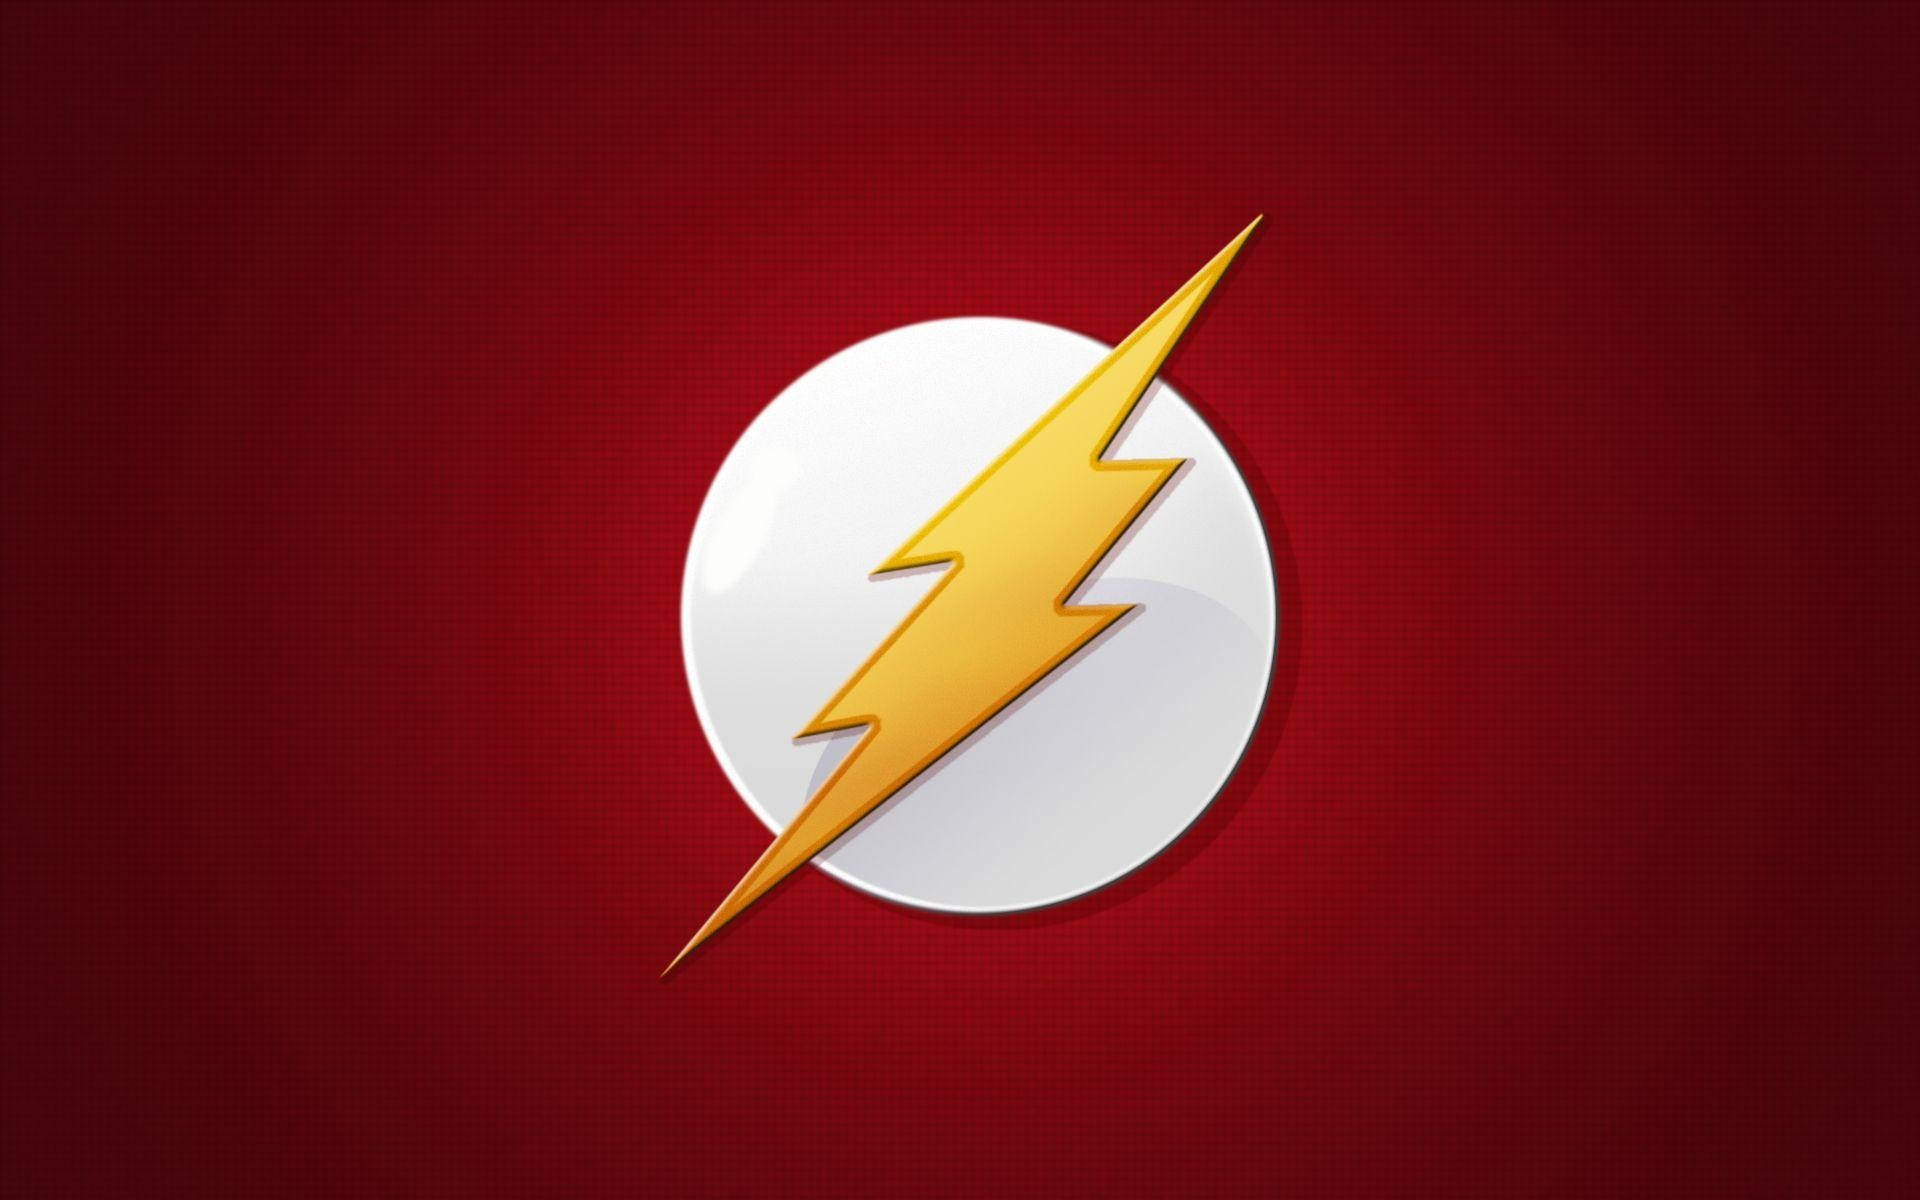 Hd Superhero The Flash Logo Wallpaper